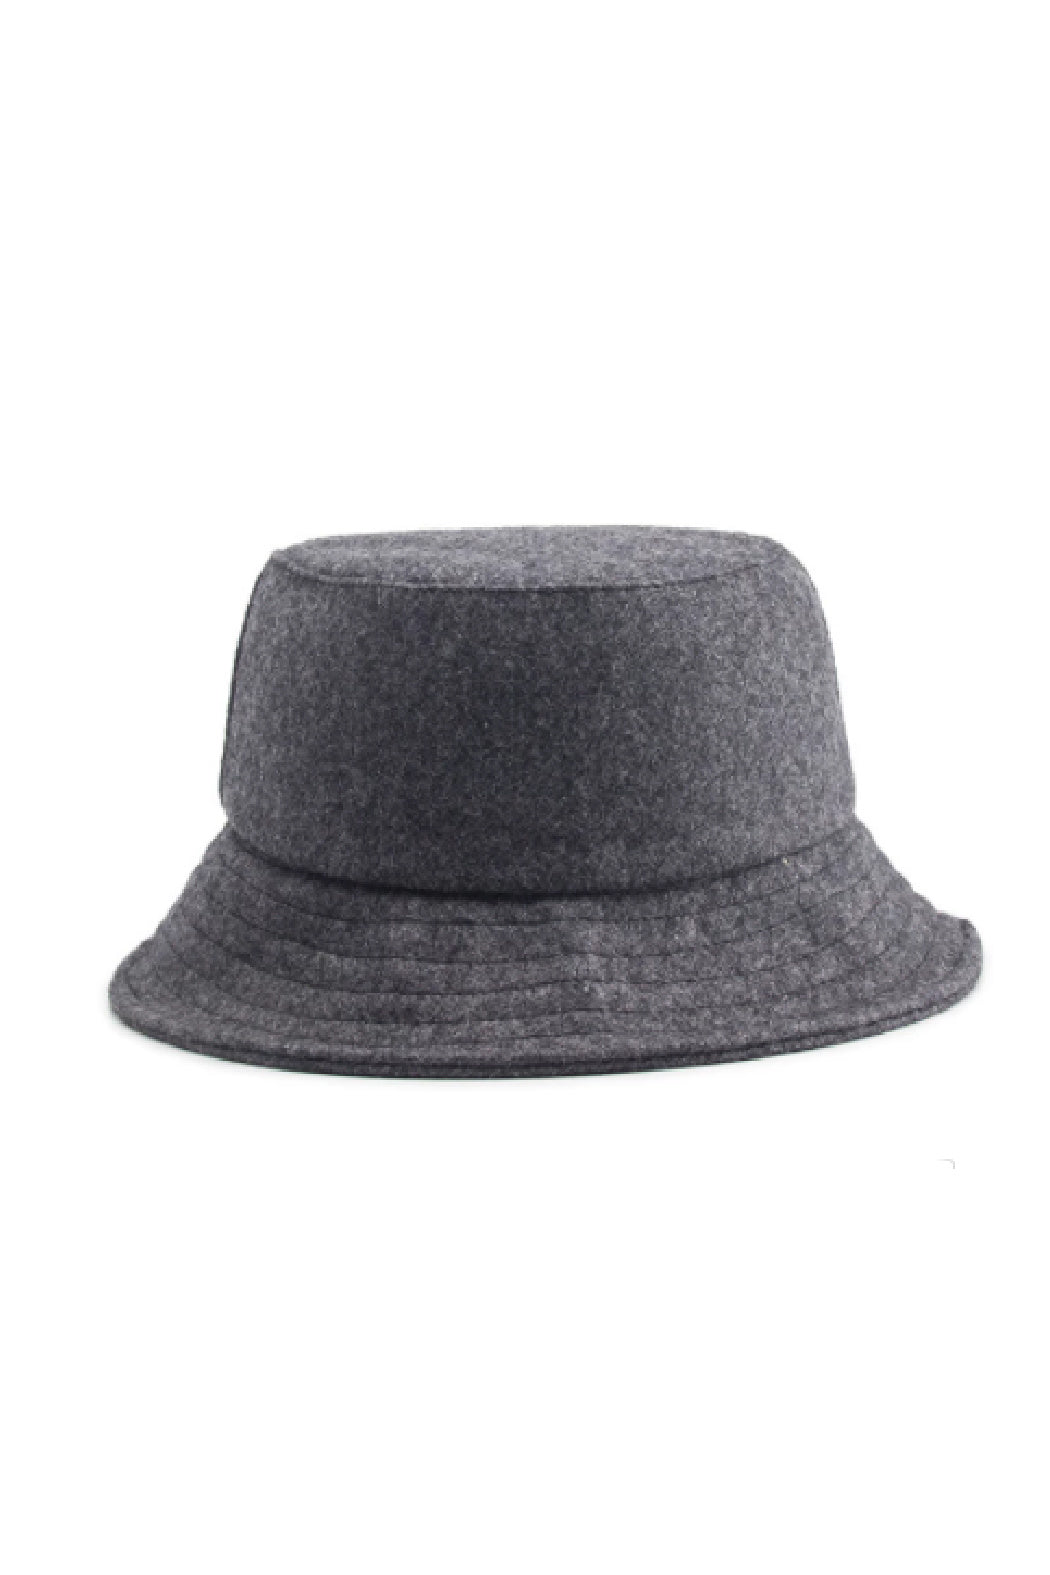 Wool Blend Bucket Hat - Embellish Your Life 